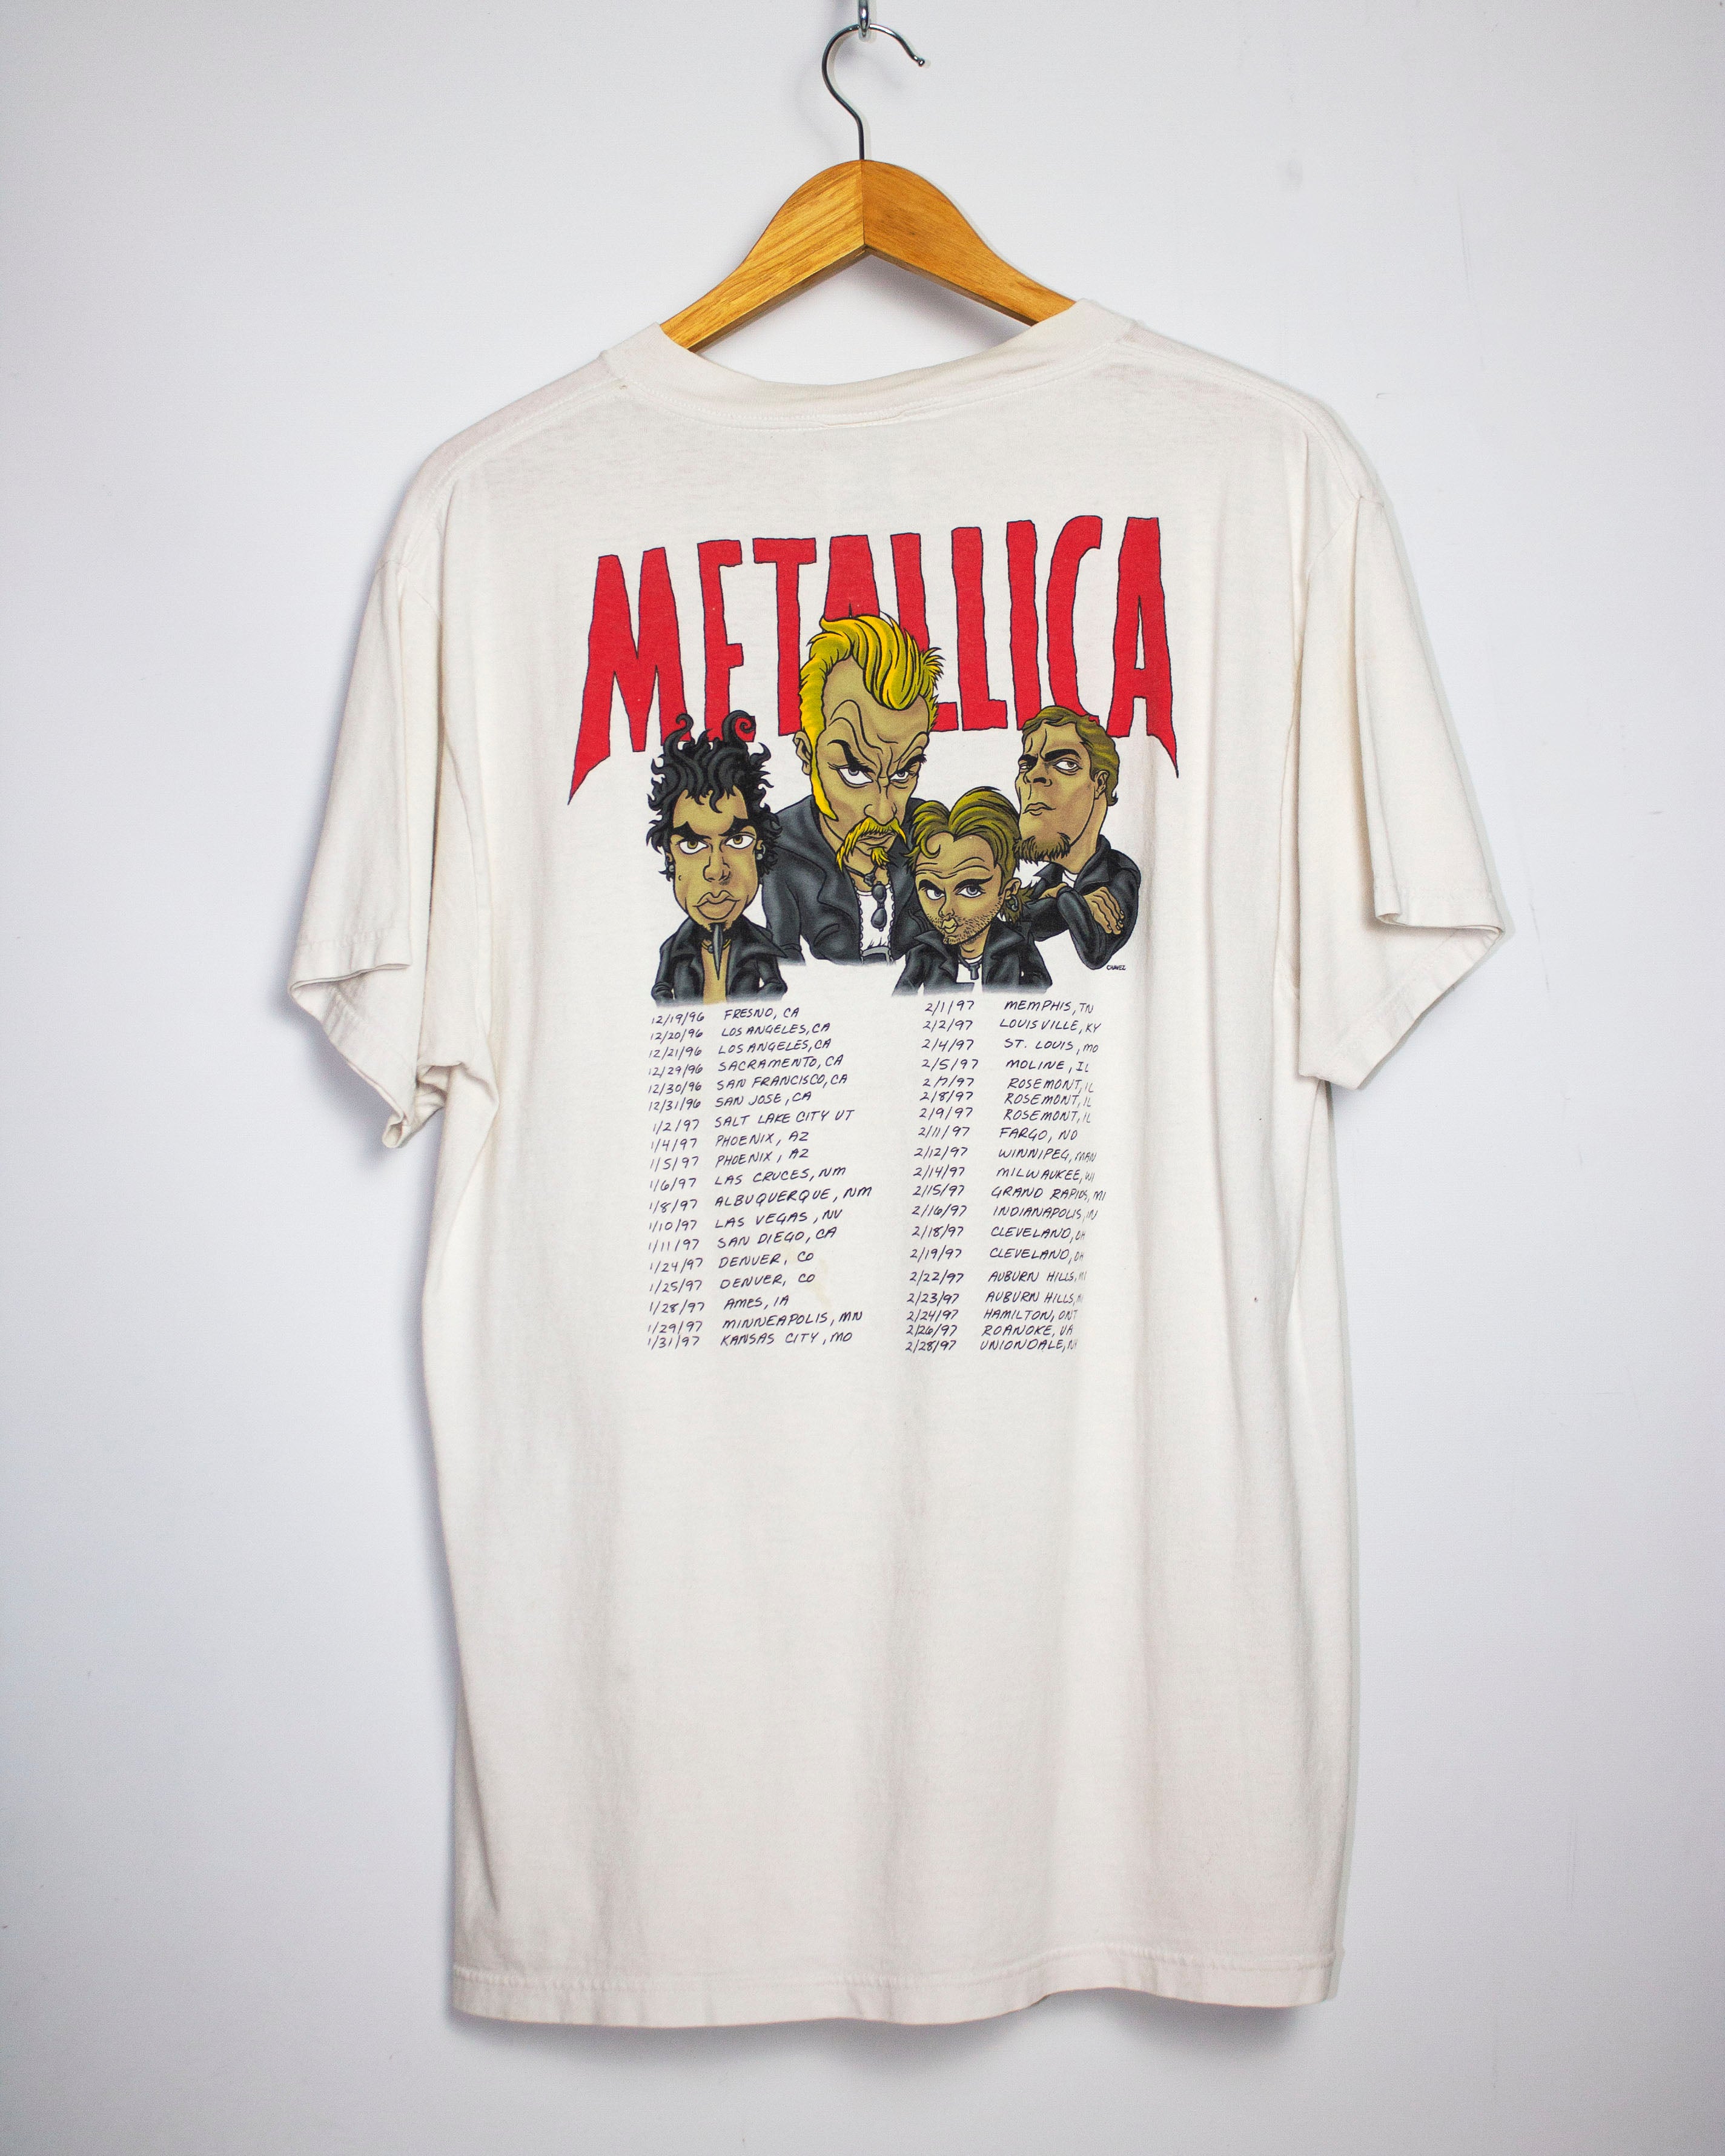 Vintage 1996 Metallica Poor Touring Me Tour T-Shirt Sz L